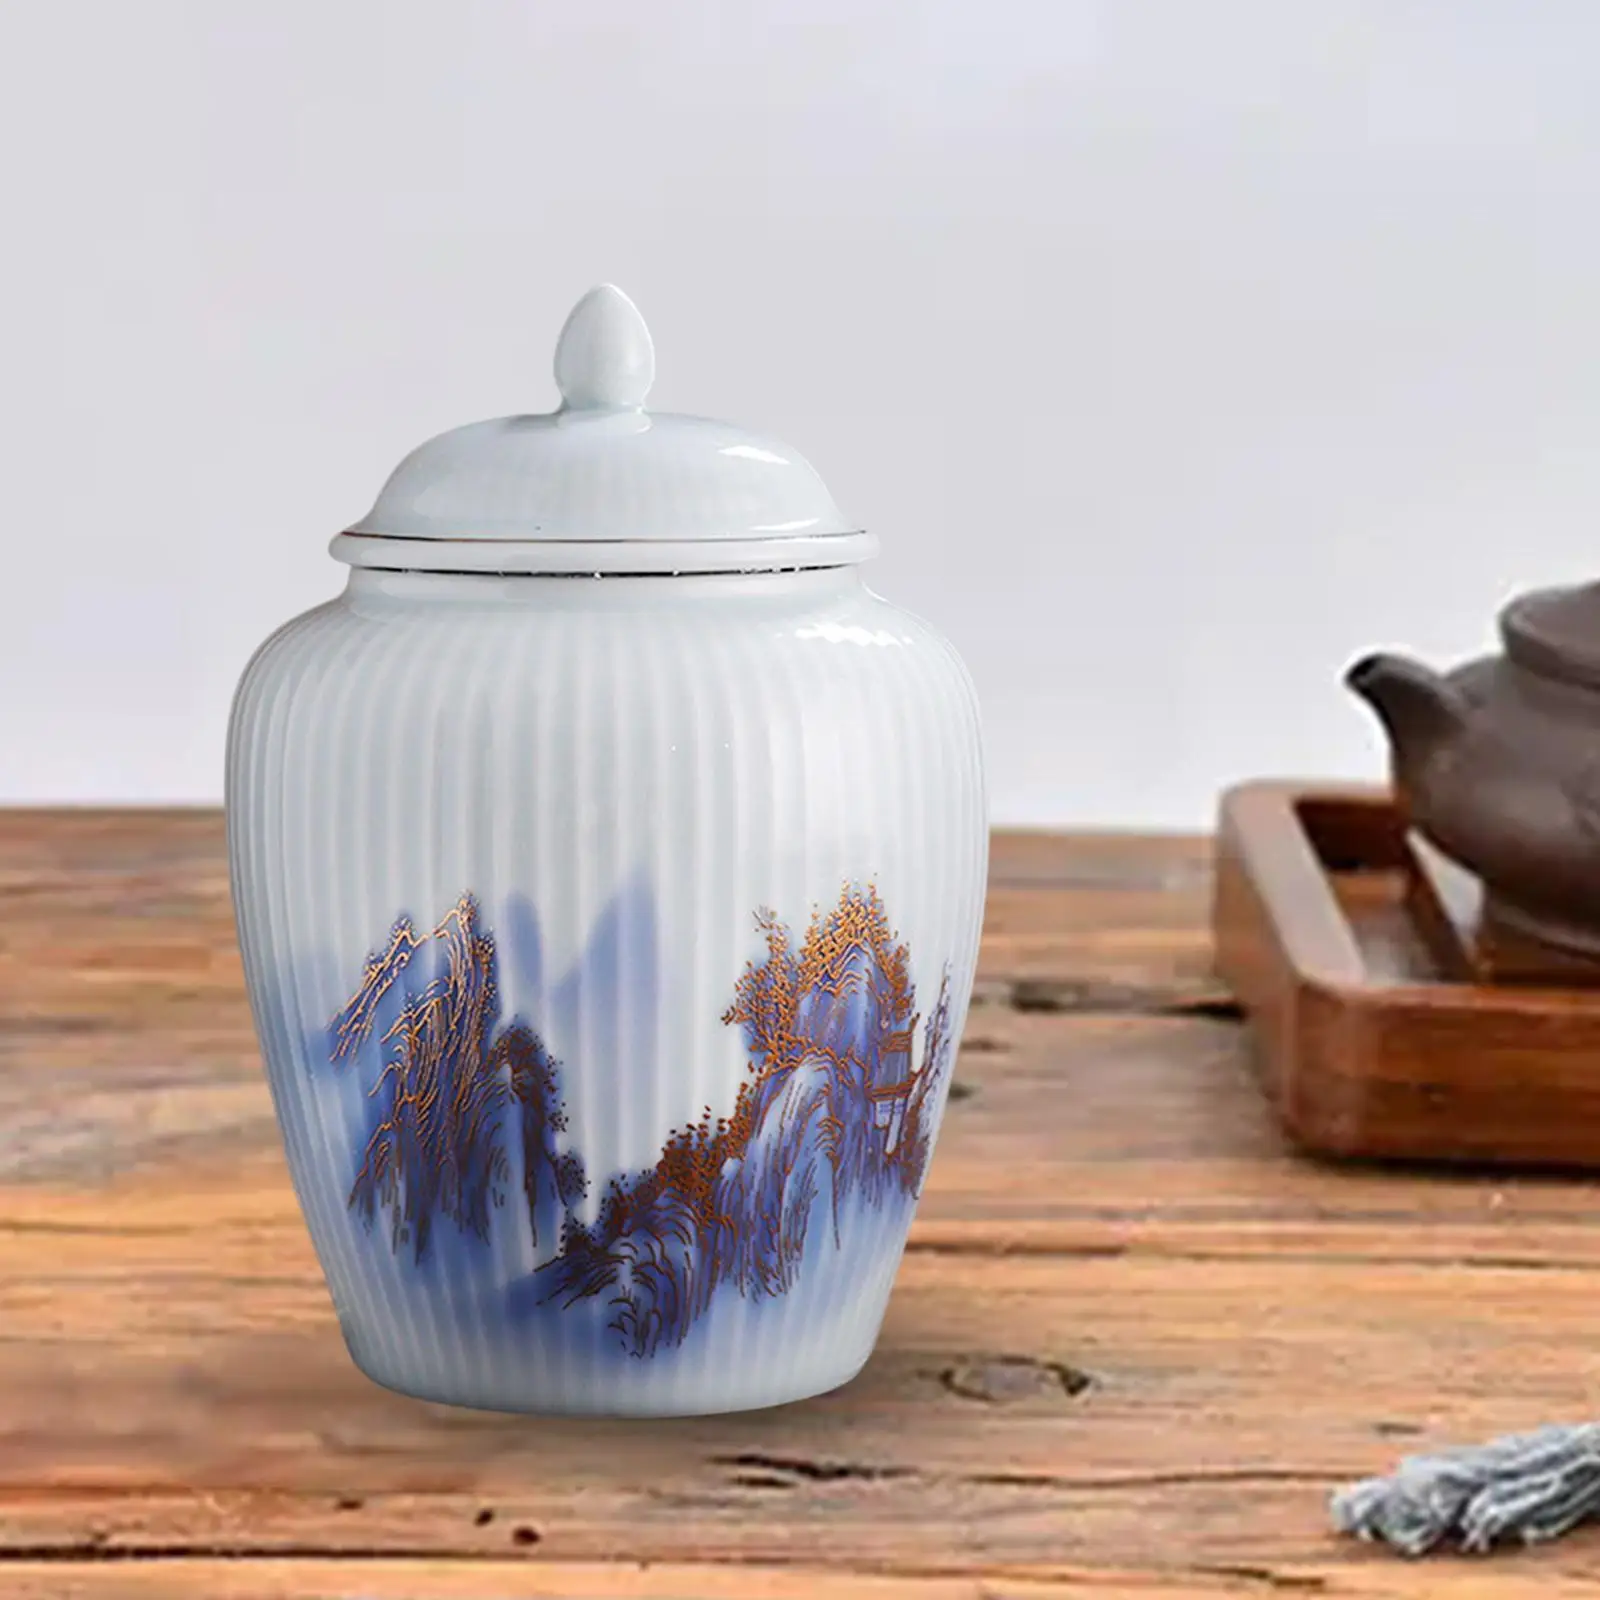 Traditional Flower Vase Temple Jar with Lid Table Centerpieces Plants Holder for Office Flower Arrangement Bedroom